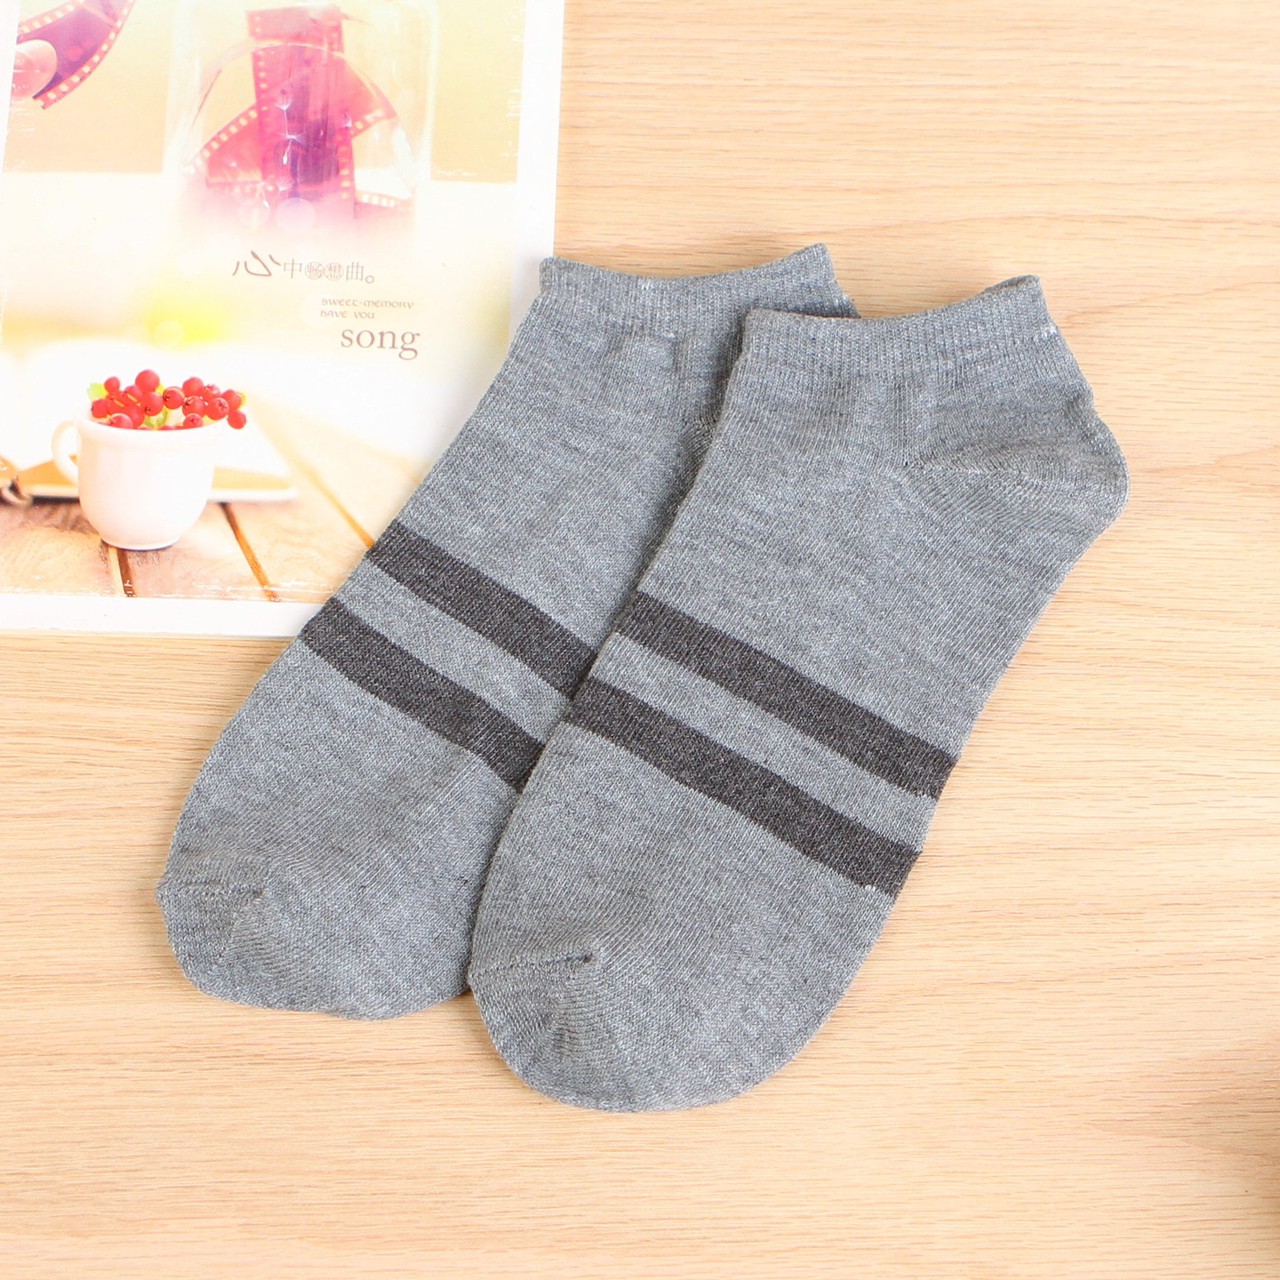 (W-007) ถุงเท้าญี่ปุ่นหุ้มข้อ สีพื้นคาดด้วยลายทาง เกรด A+ ขึ้นห้าง